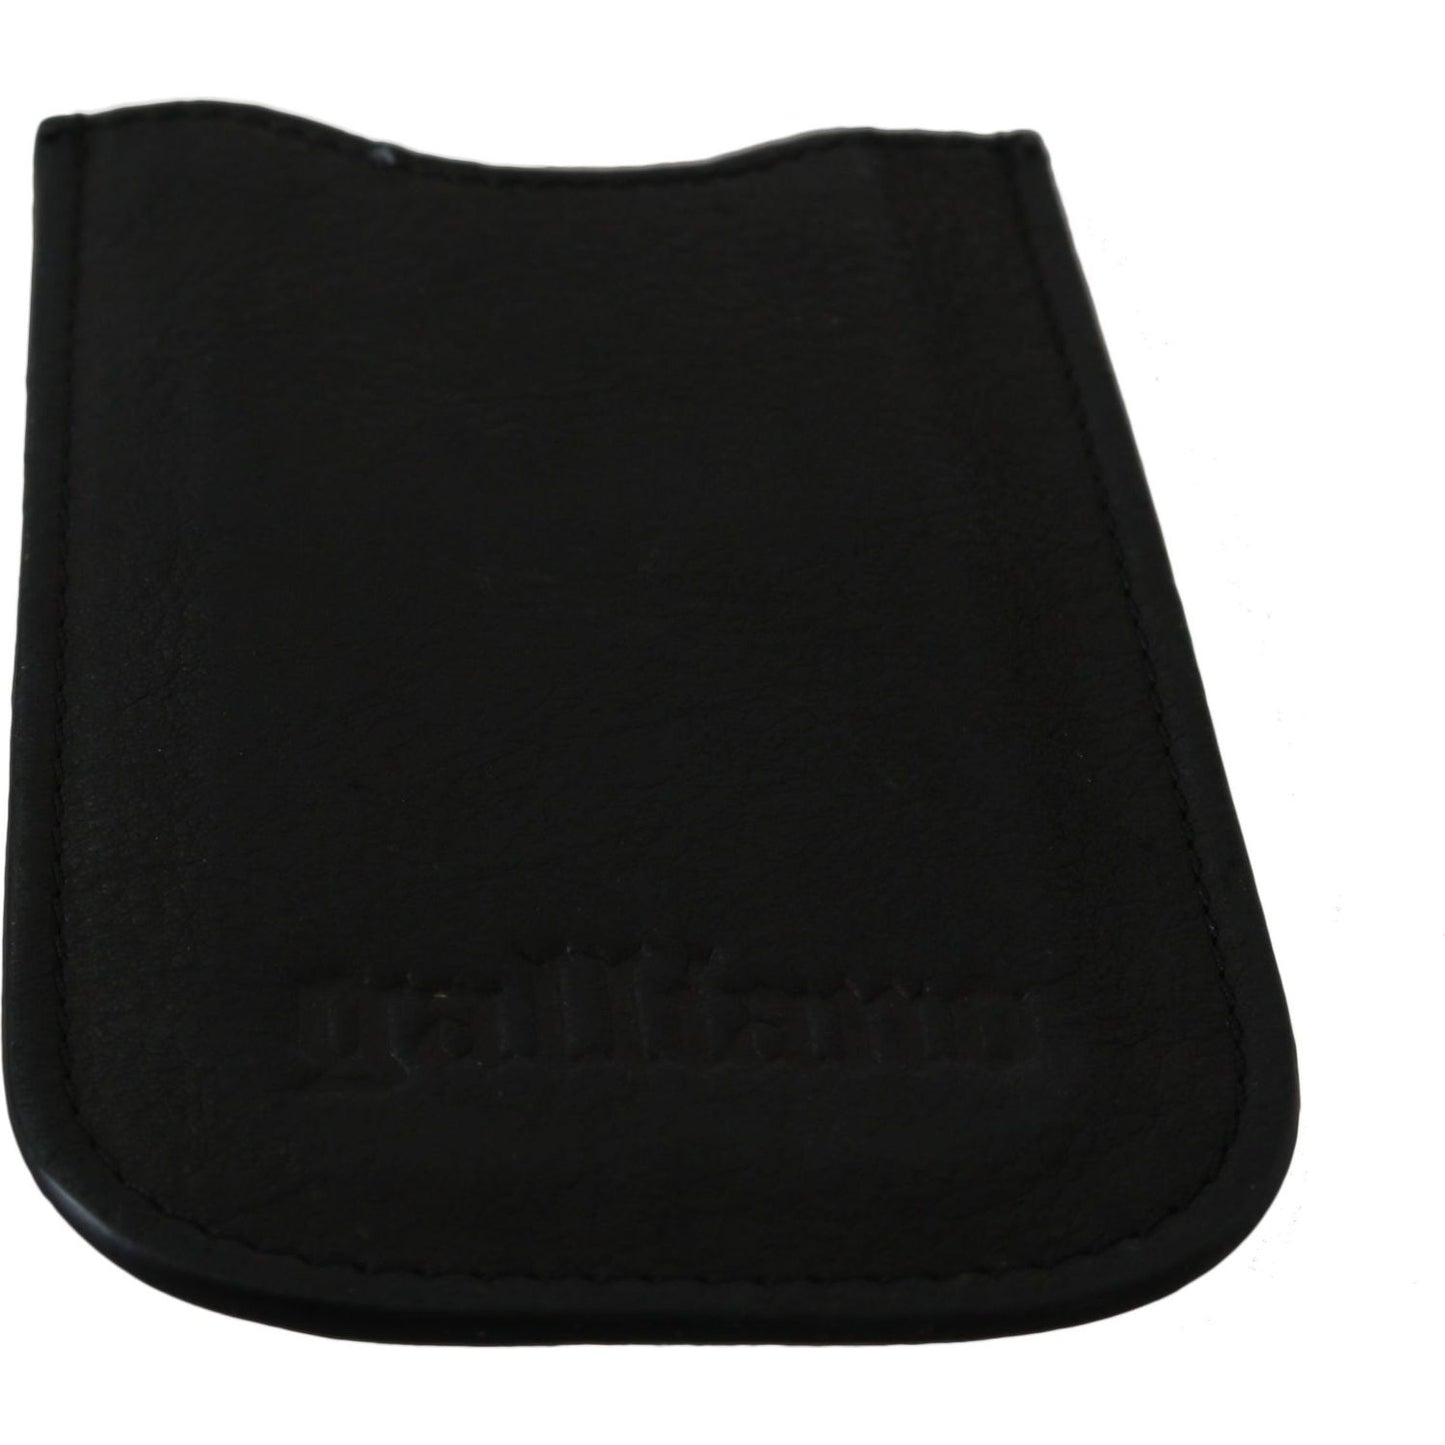 John Galliano Elegant Black Genuine Leather Men's Wallet black-leather-multifunctional-men-id-bill-card-holder-wallet Wallet